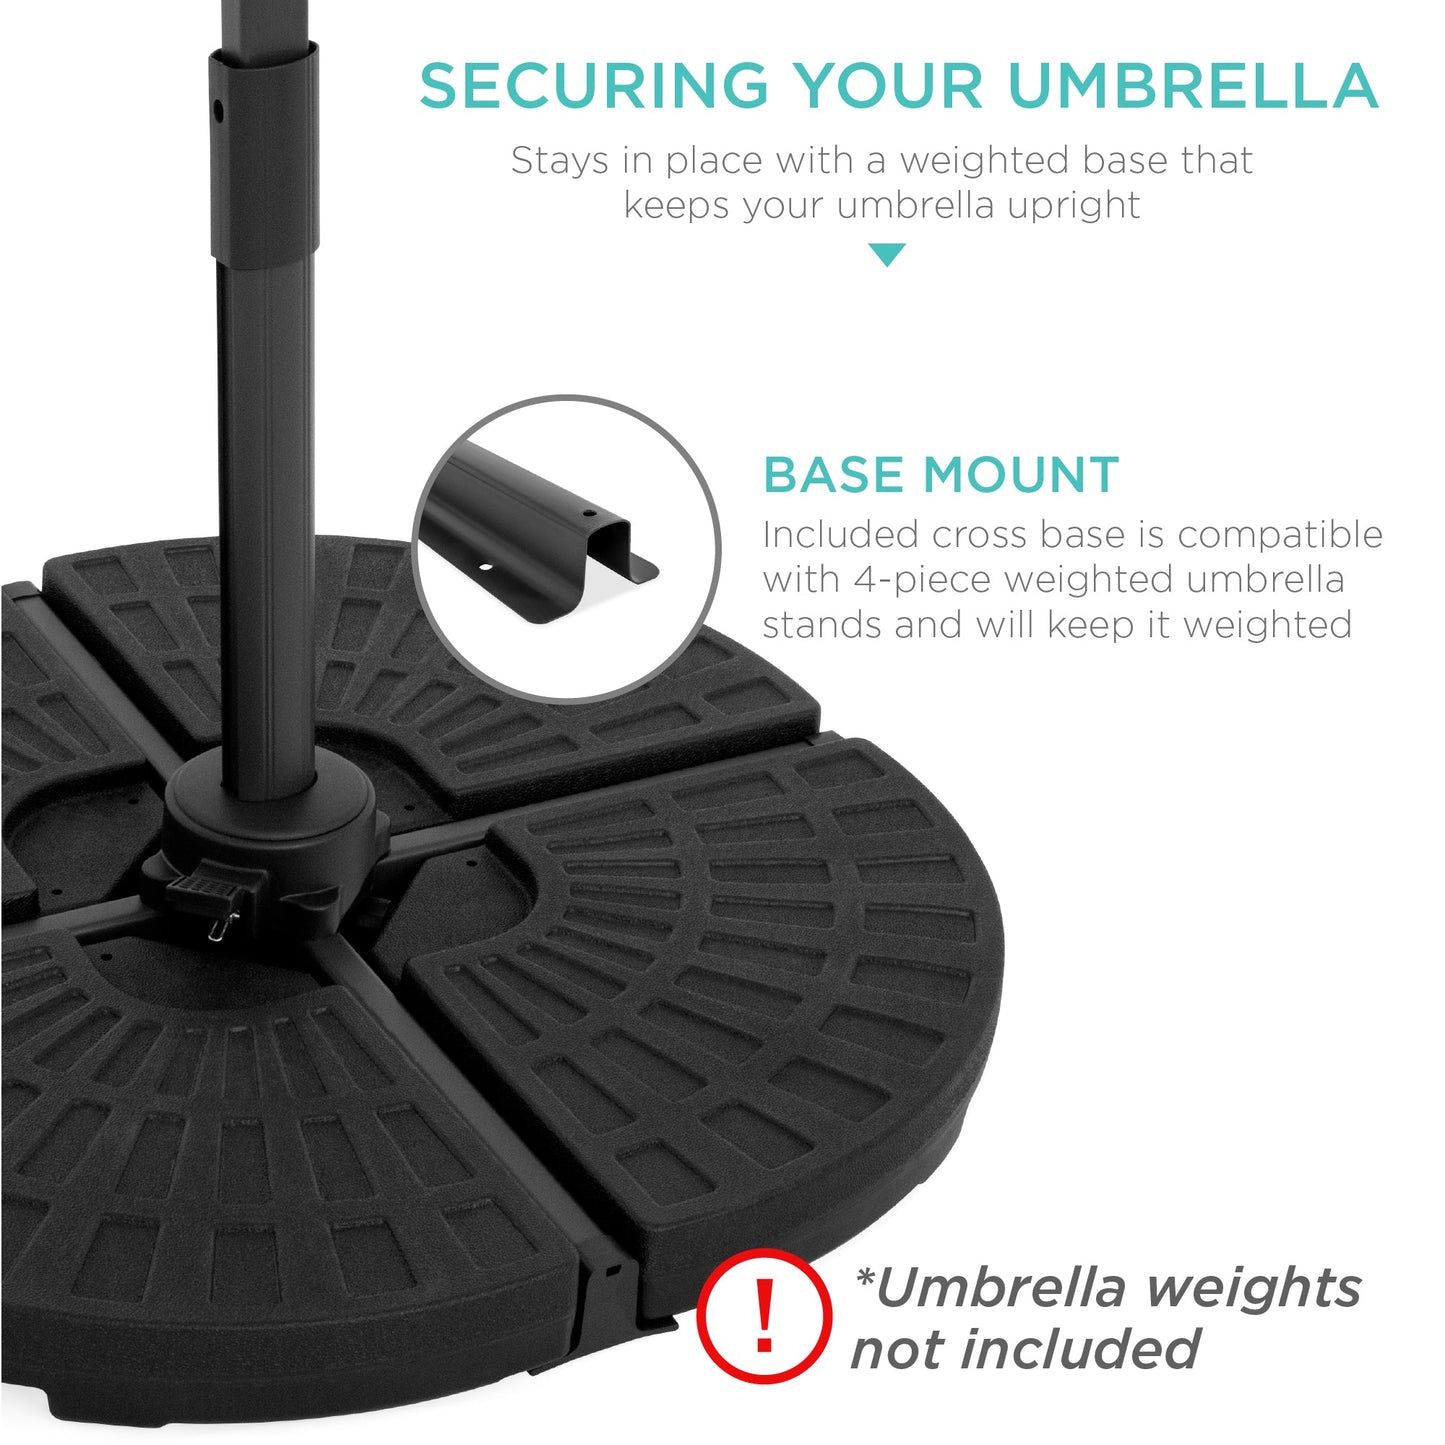 360-Degree LED Cantilever Offset Patio Umbrella w/ Tilt - 10ft